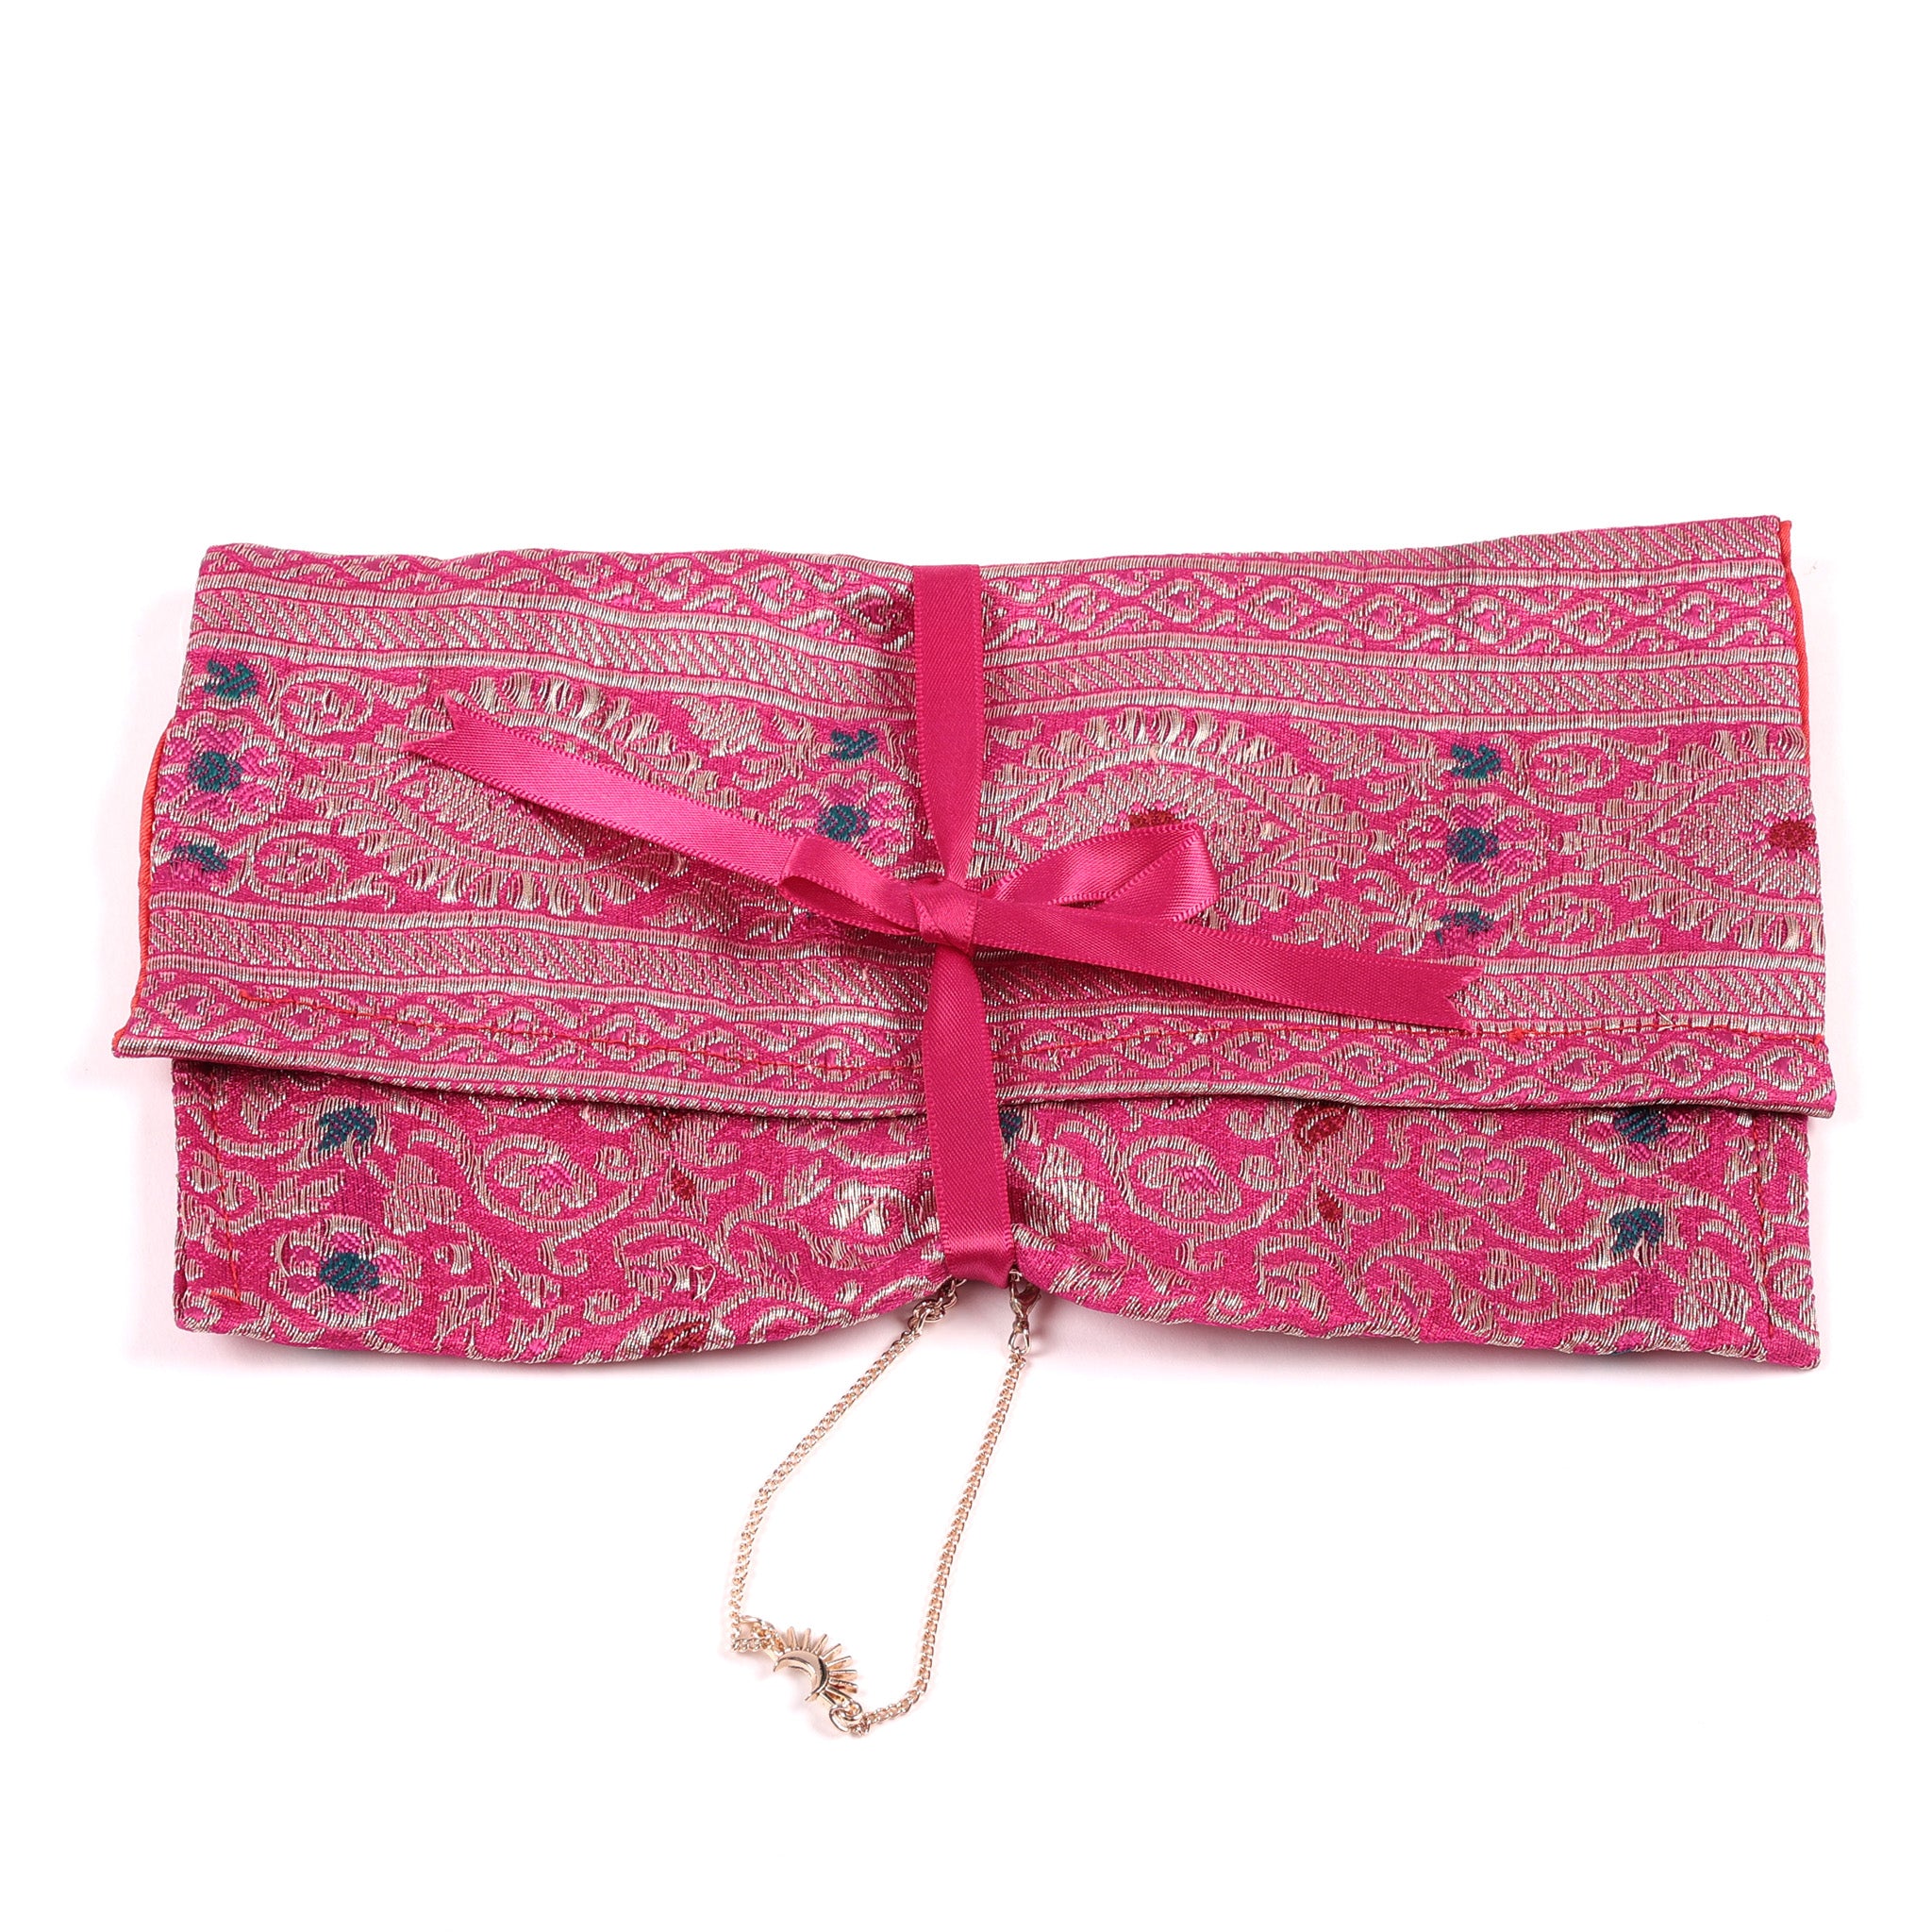 pink sapphire purse made from vintage silk sari